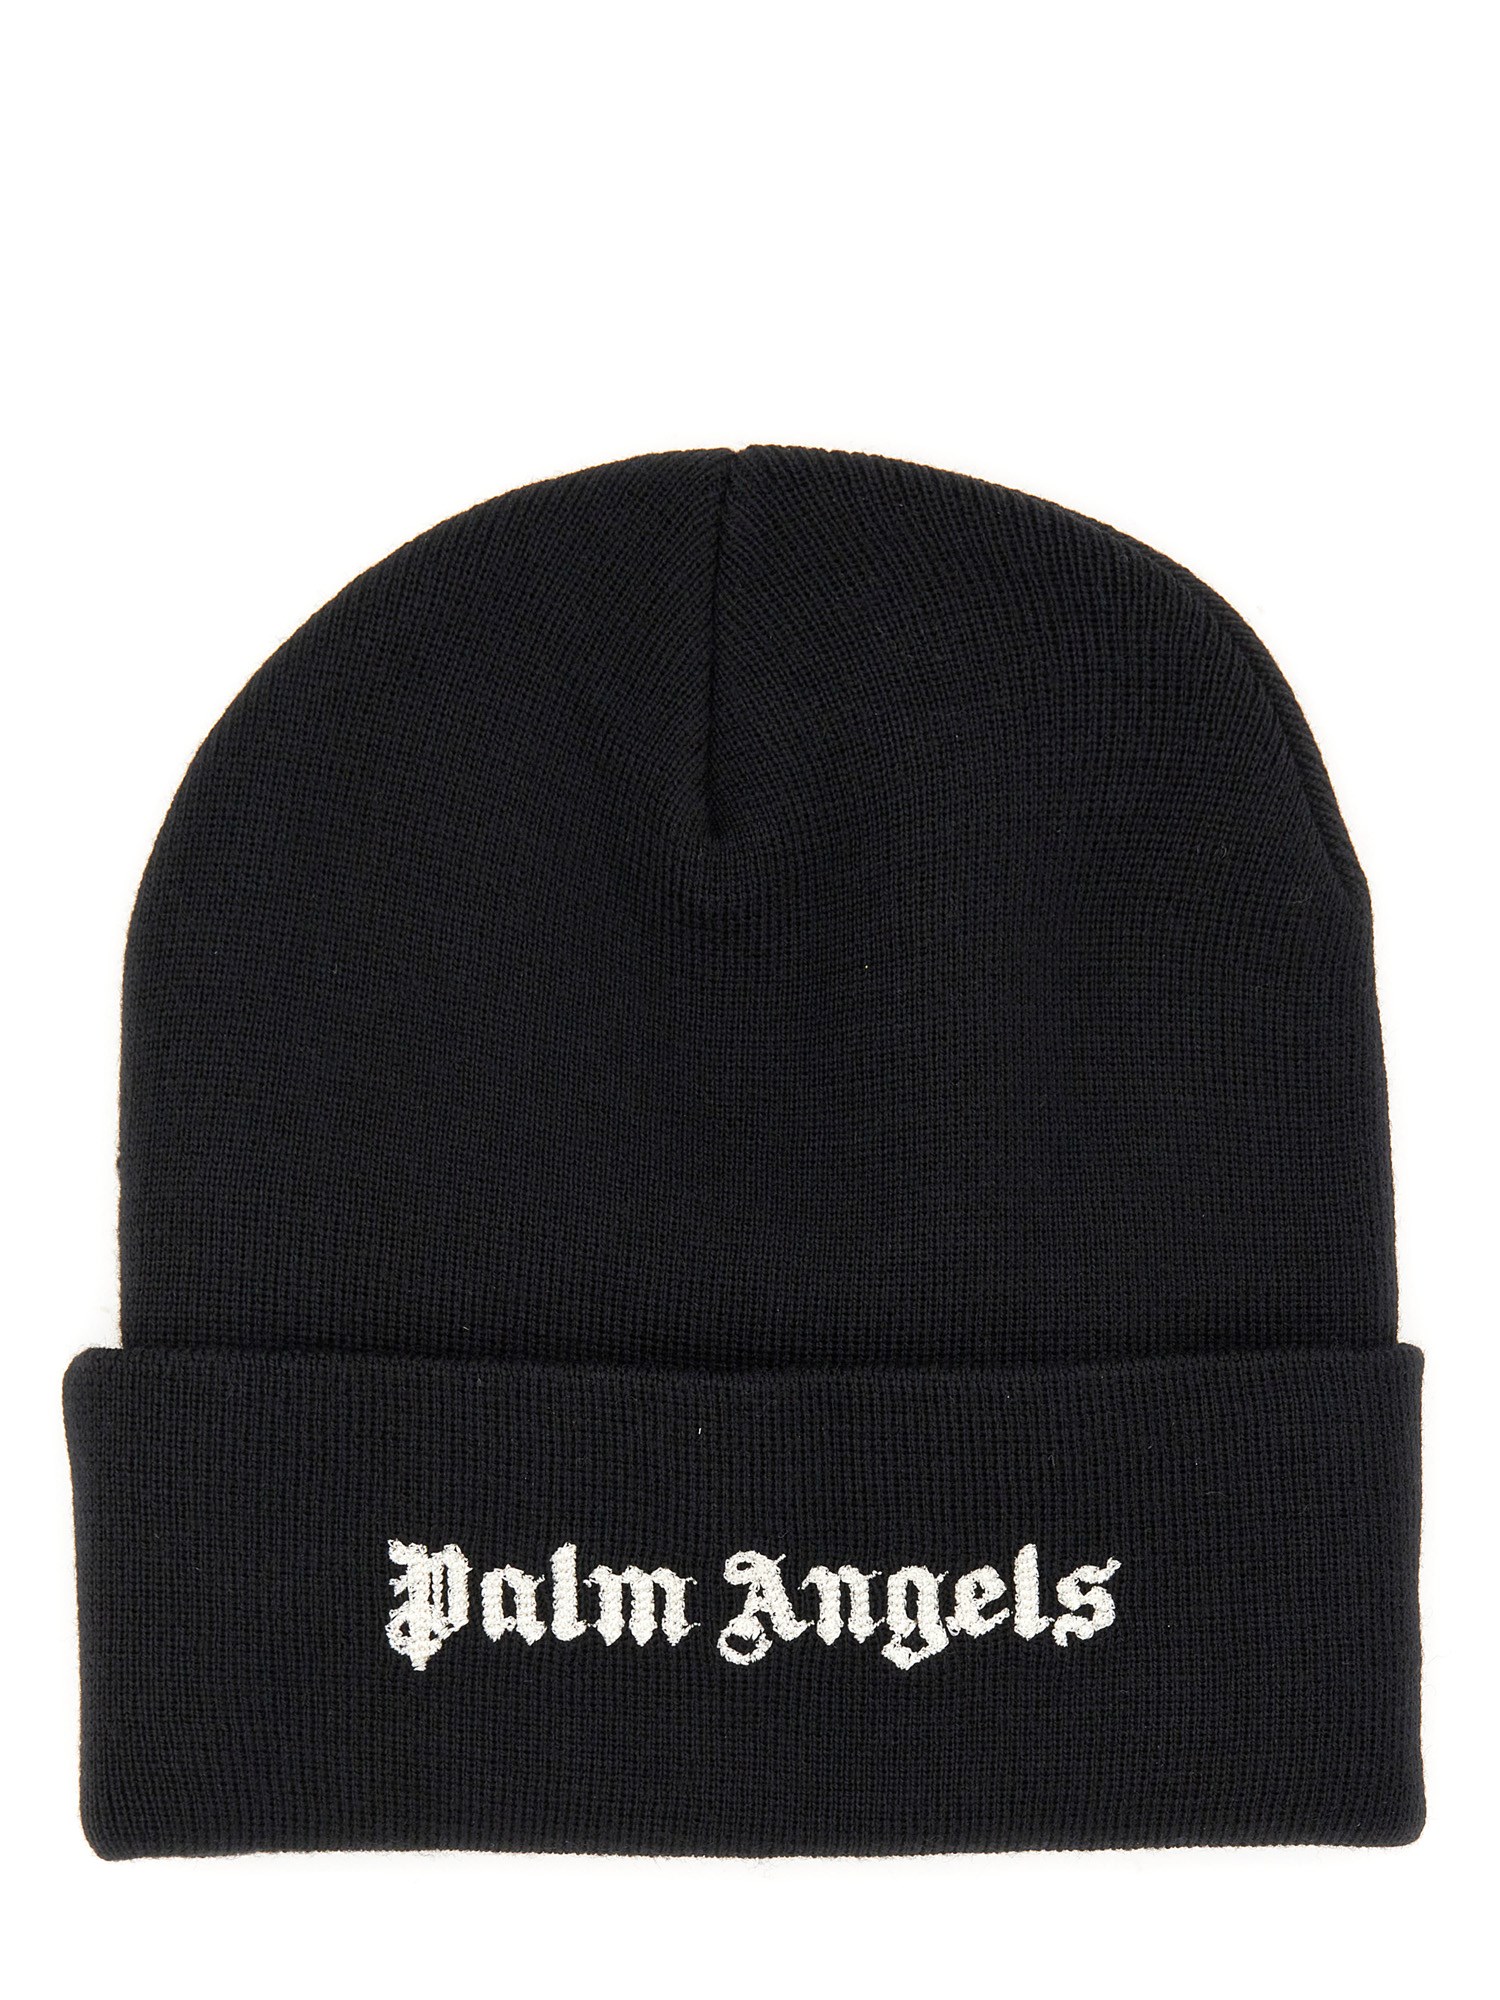 palm angels beanie hat